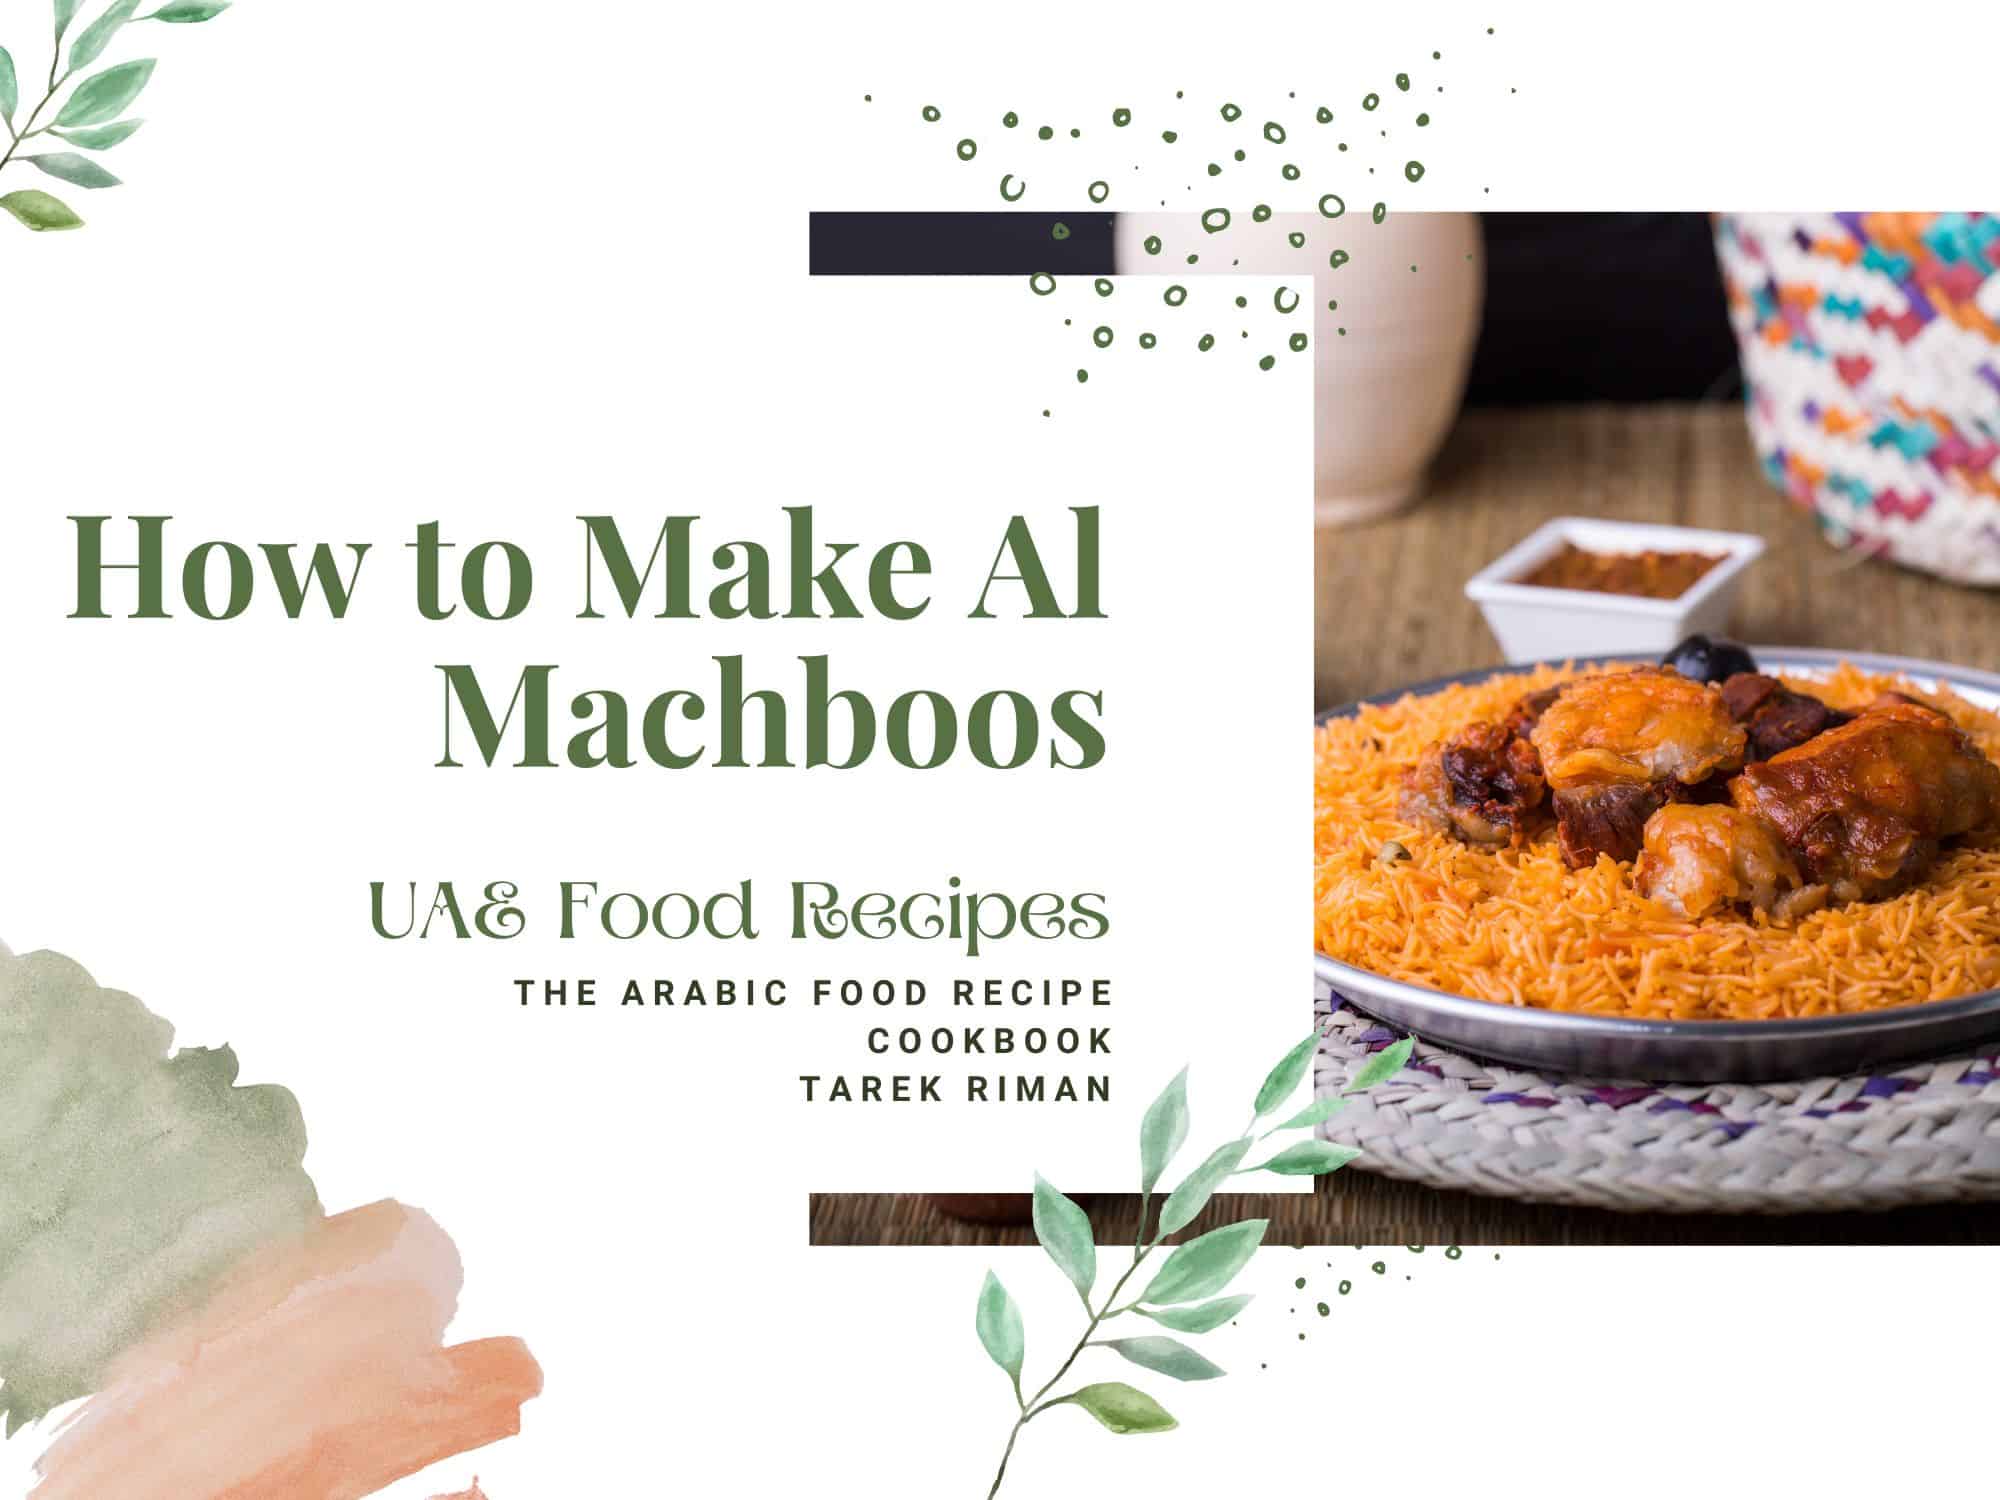 How to Make Al Machboos - UAE Food Recipes